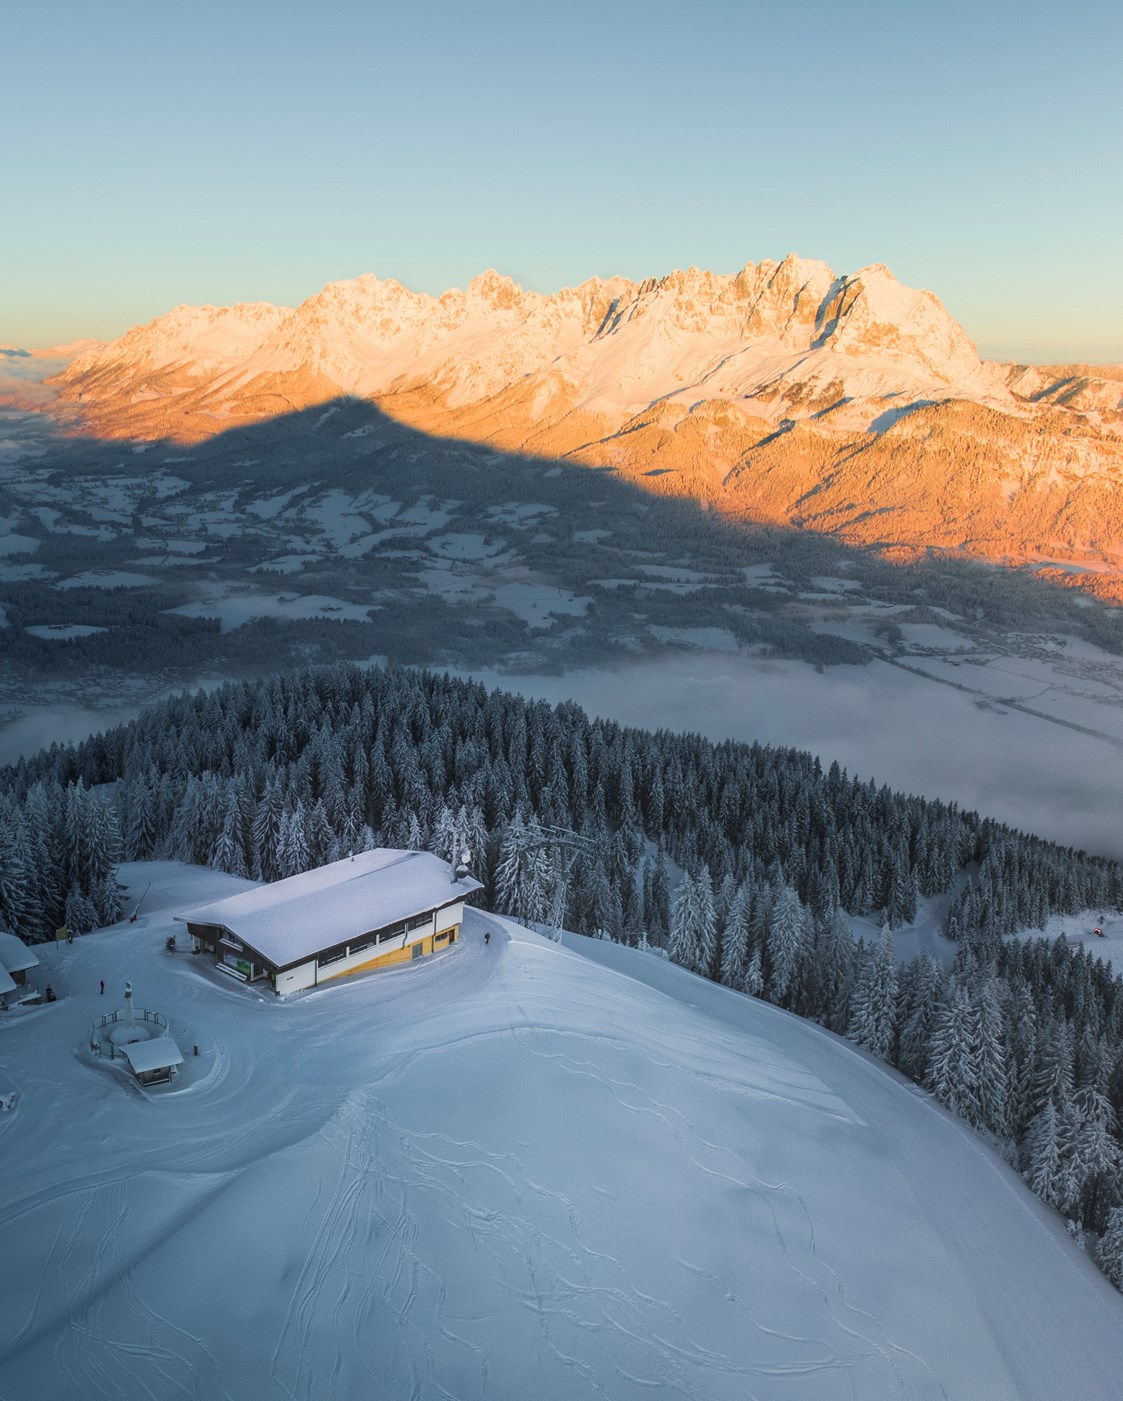 Skigebiet: SkiStar St. Johann in Tirol